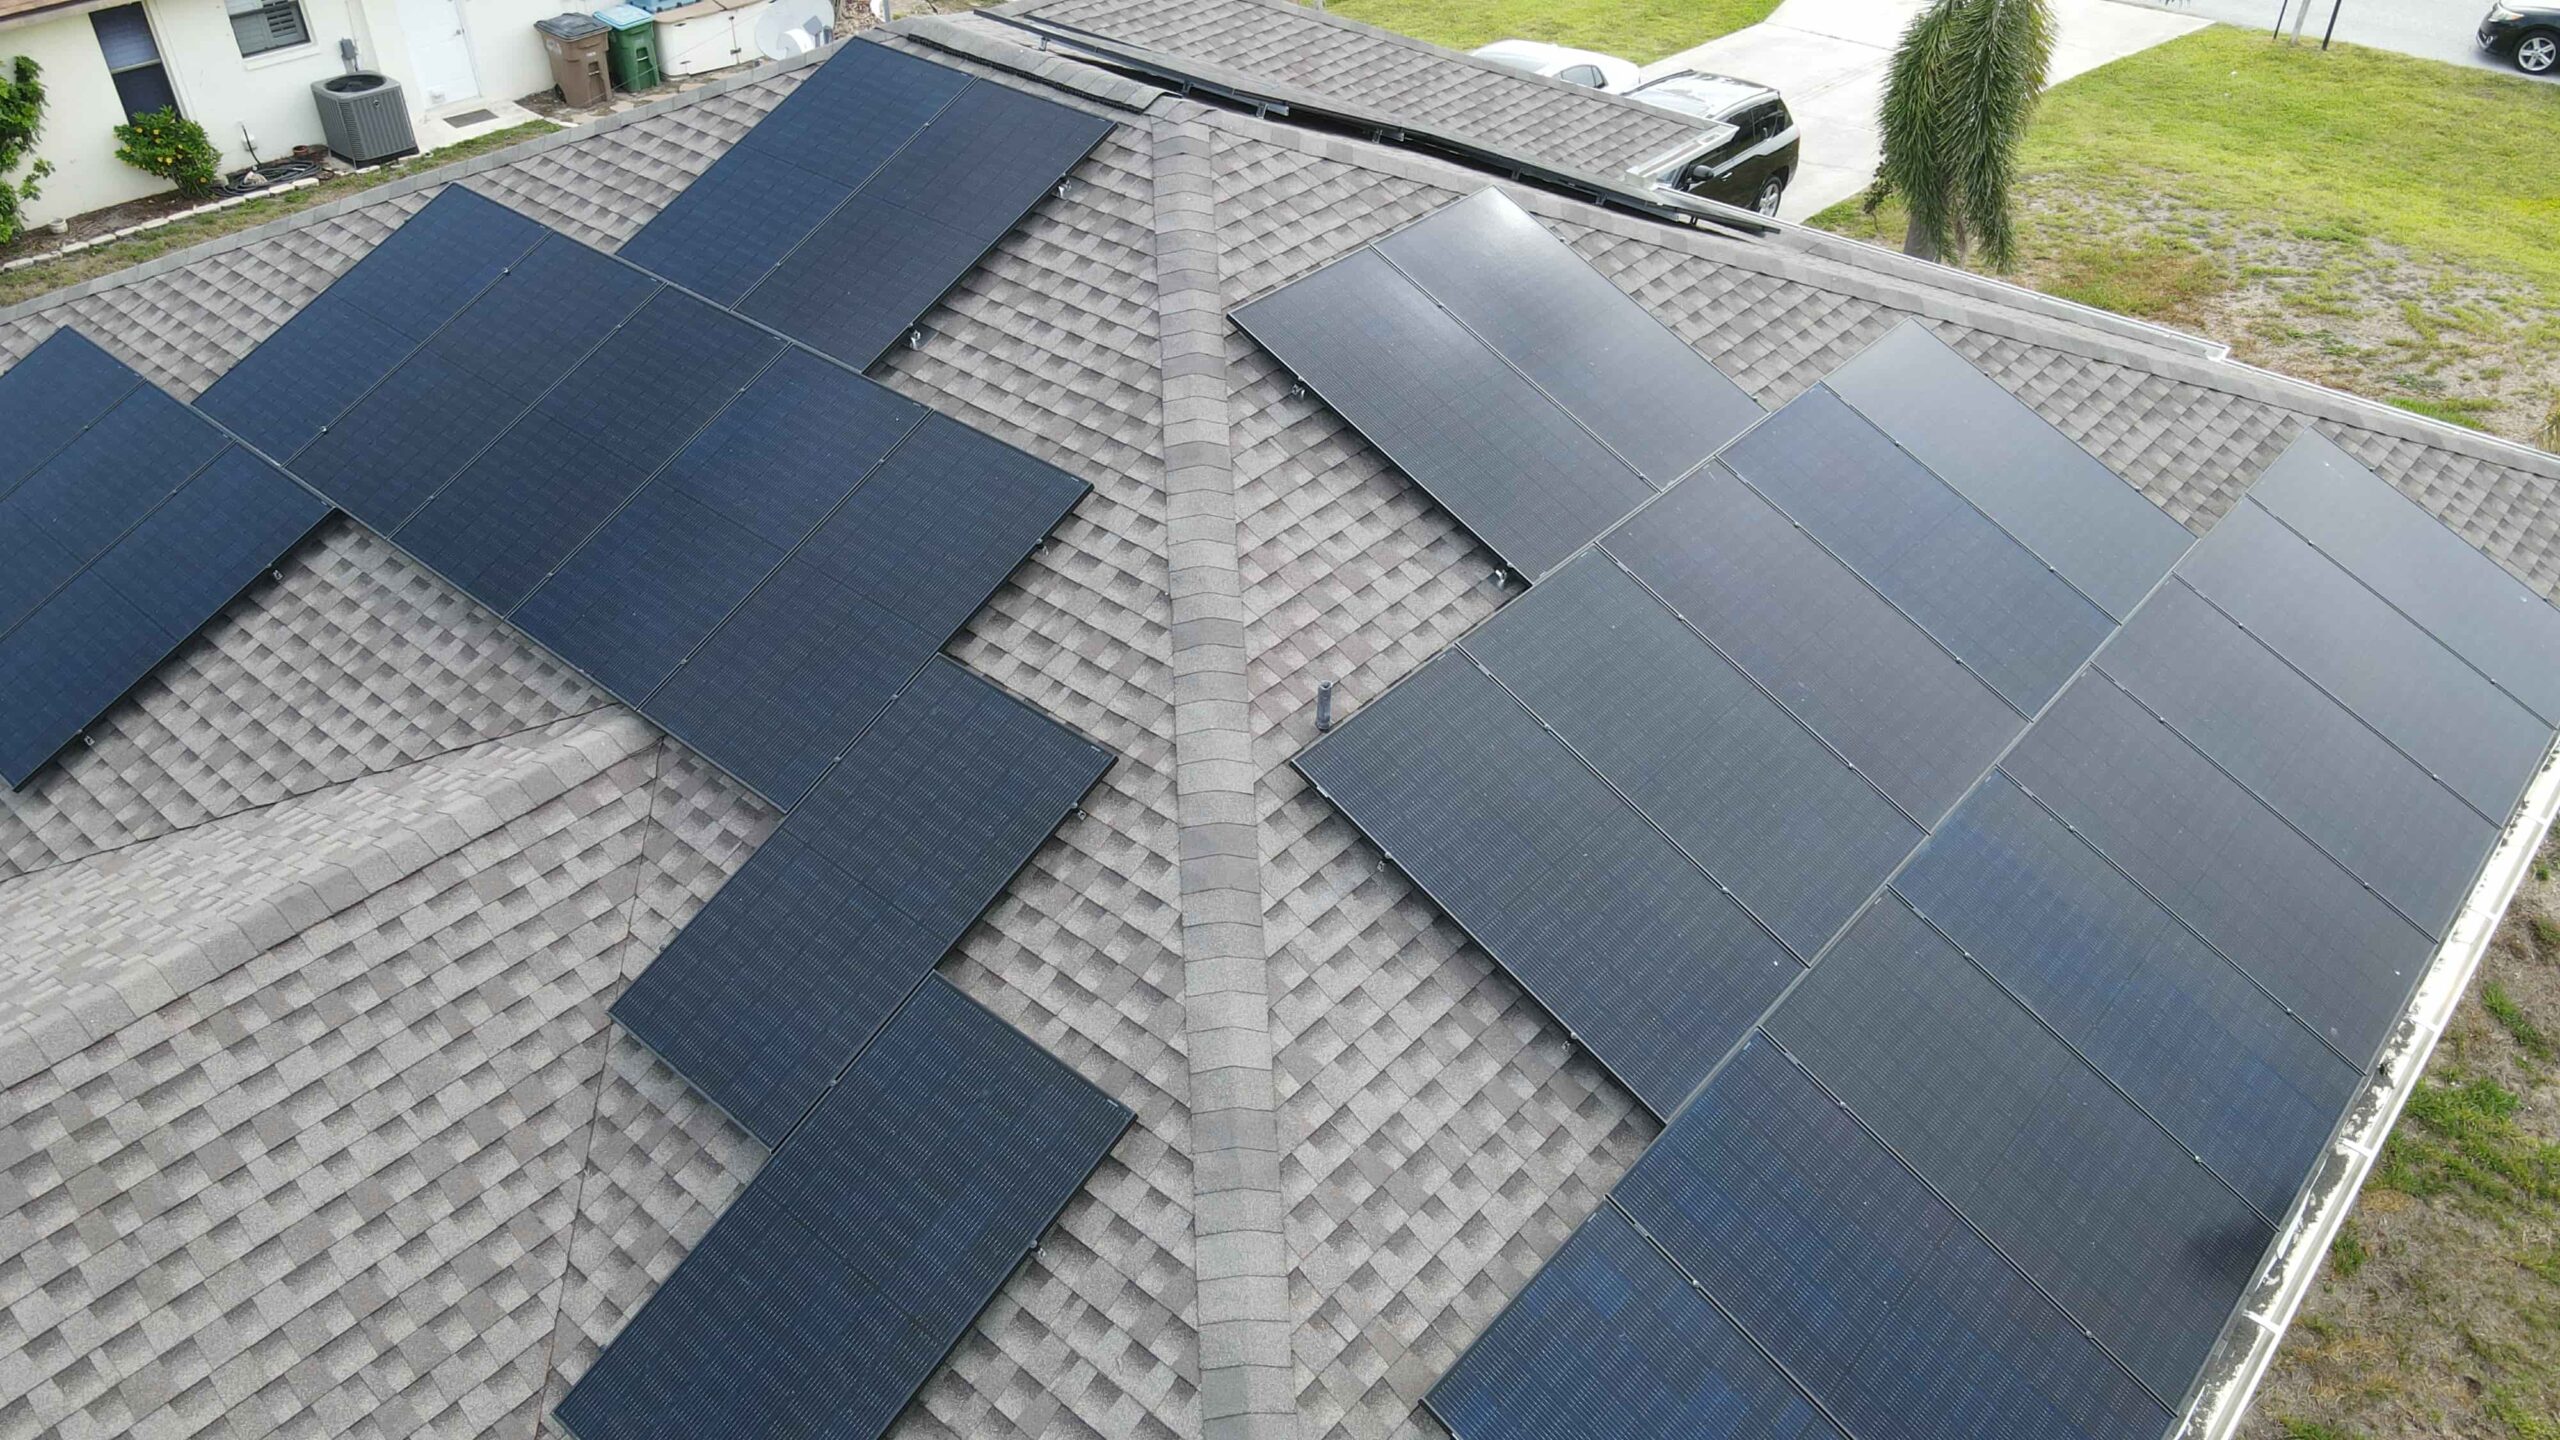 PV solar